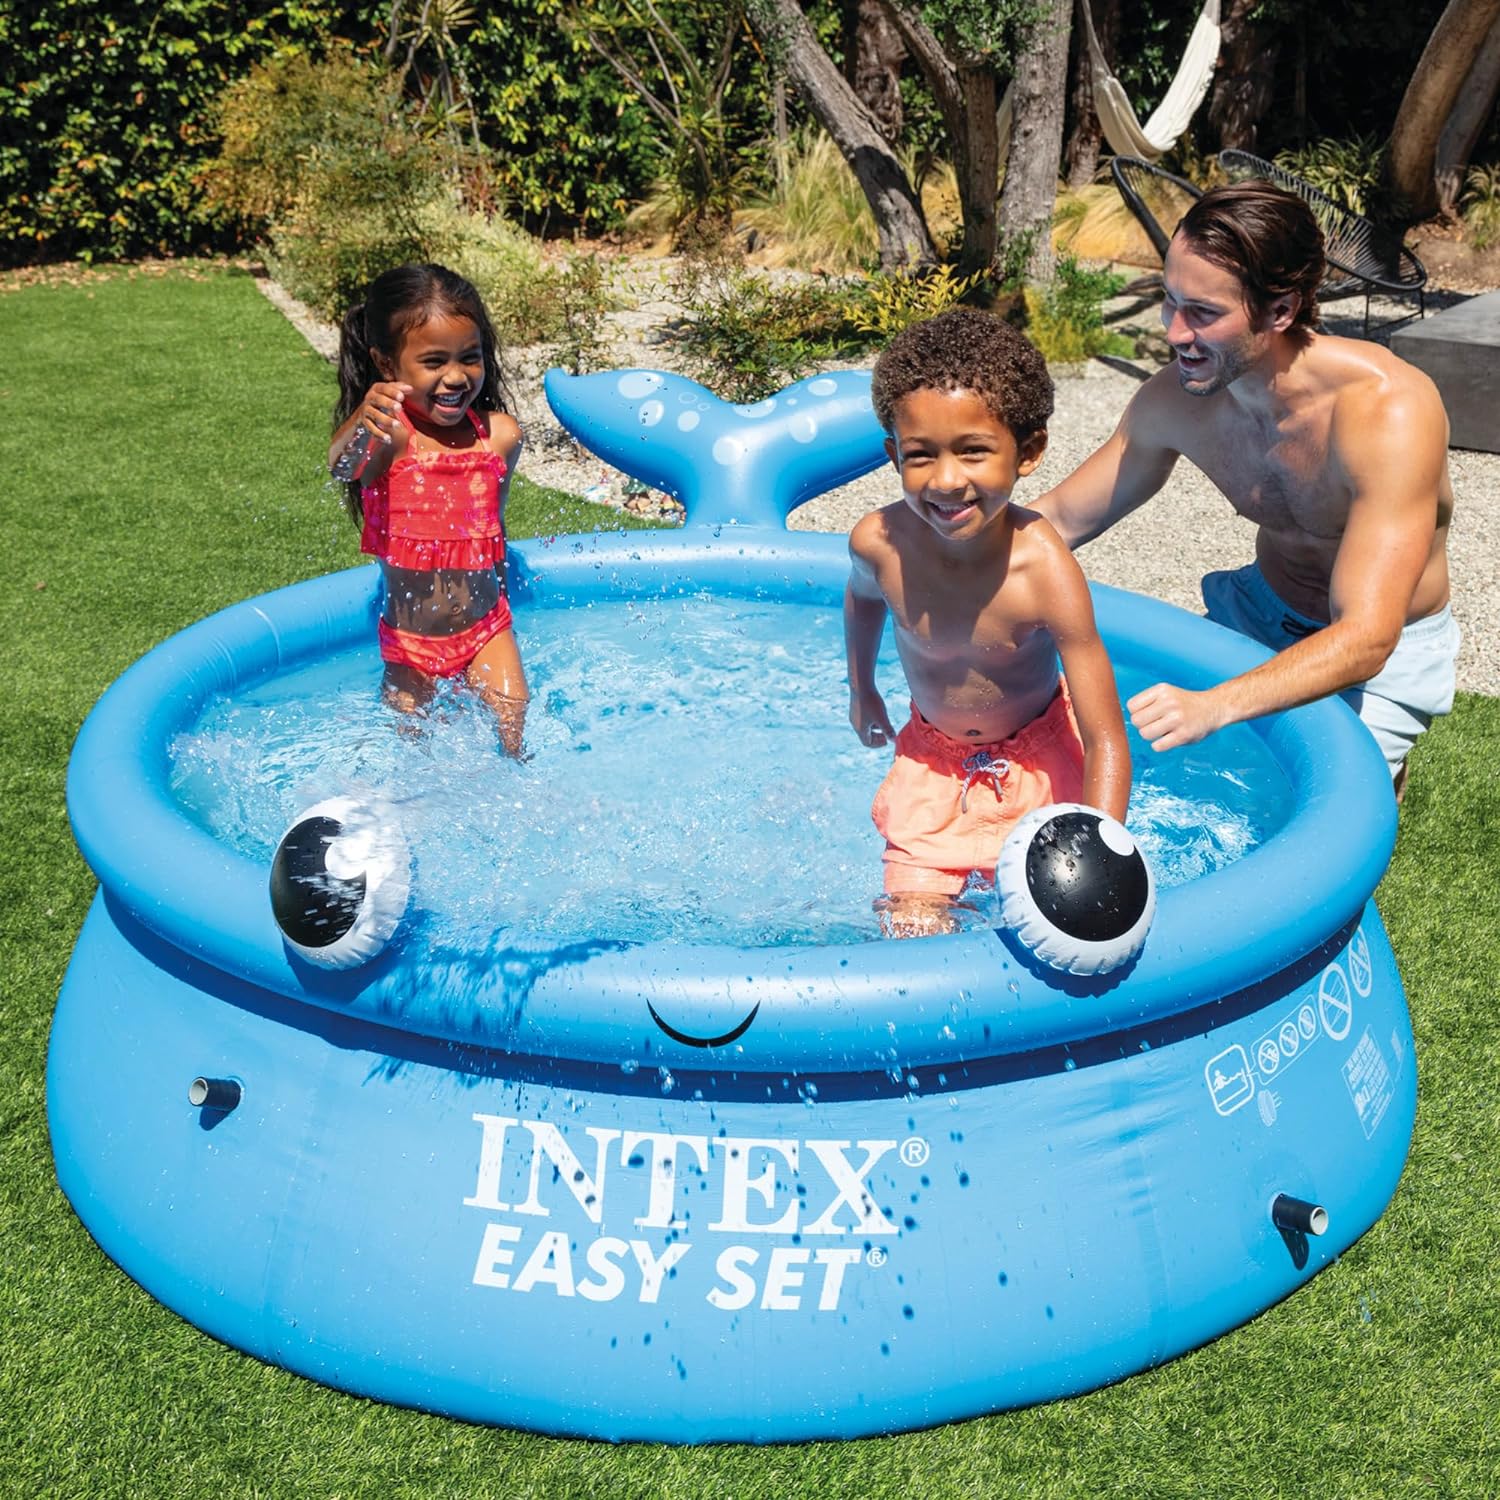 Intex Easy Set Pool - Jolly Whale 183x51cm - Poolpirat